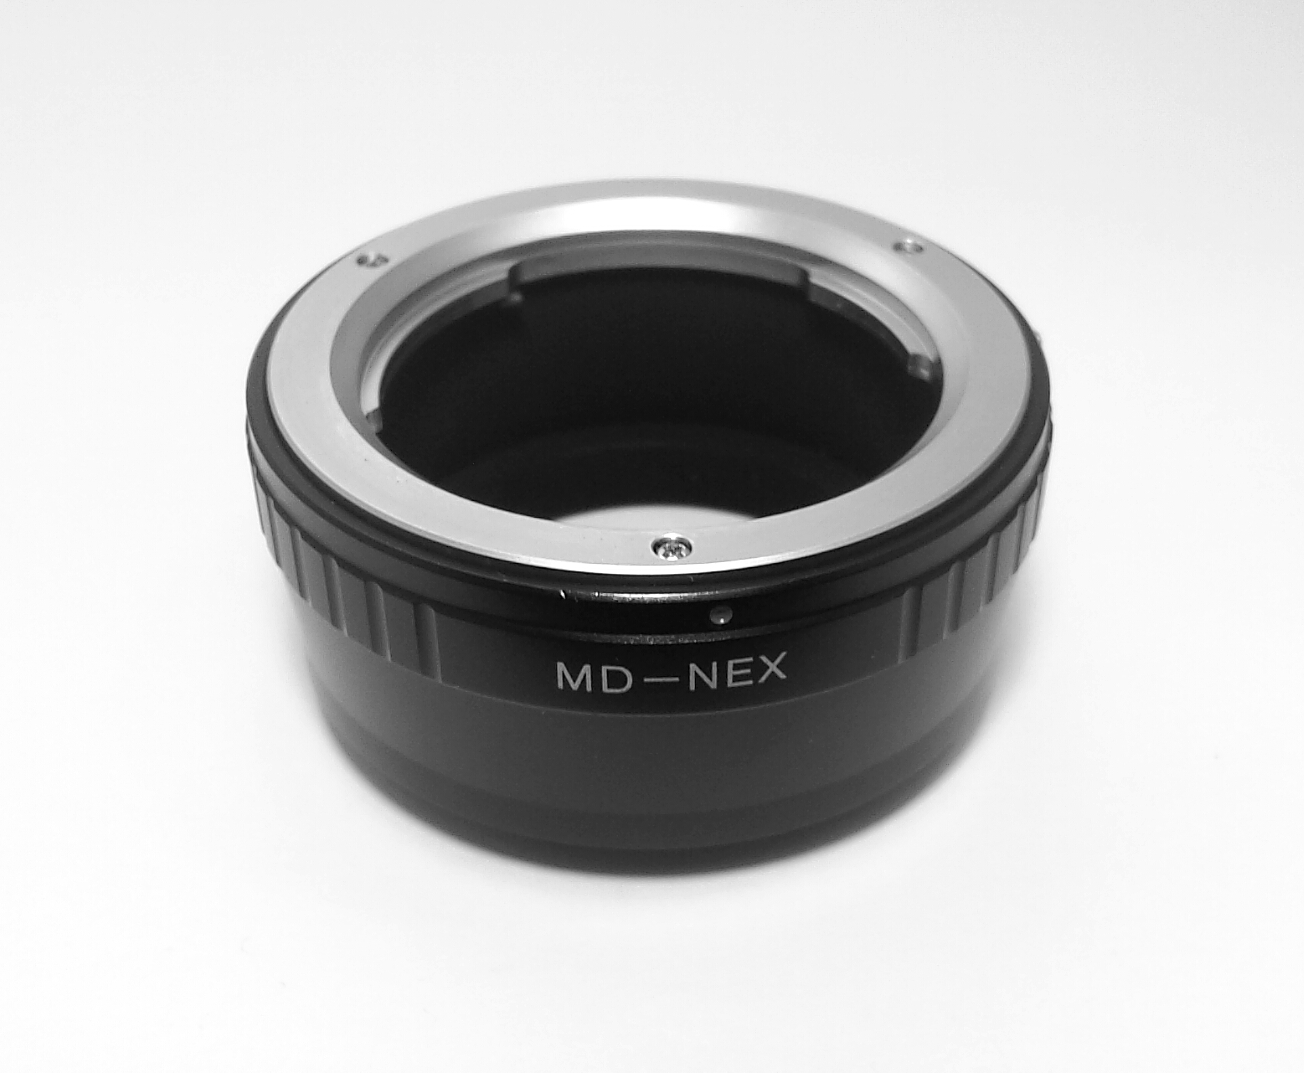 Minolta MD lens to Sony NEX Camera Body Adapter